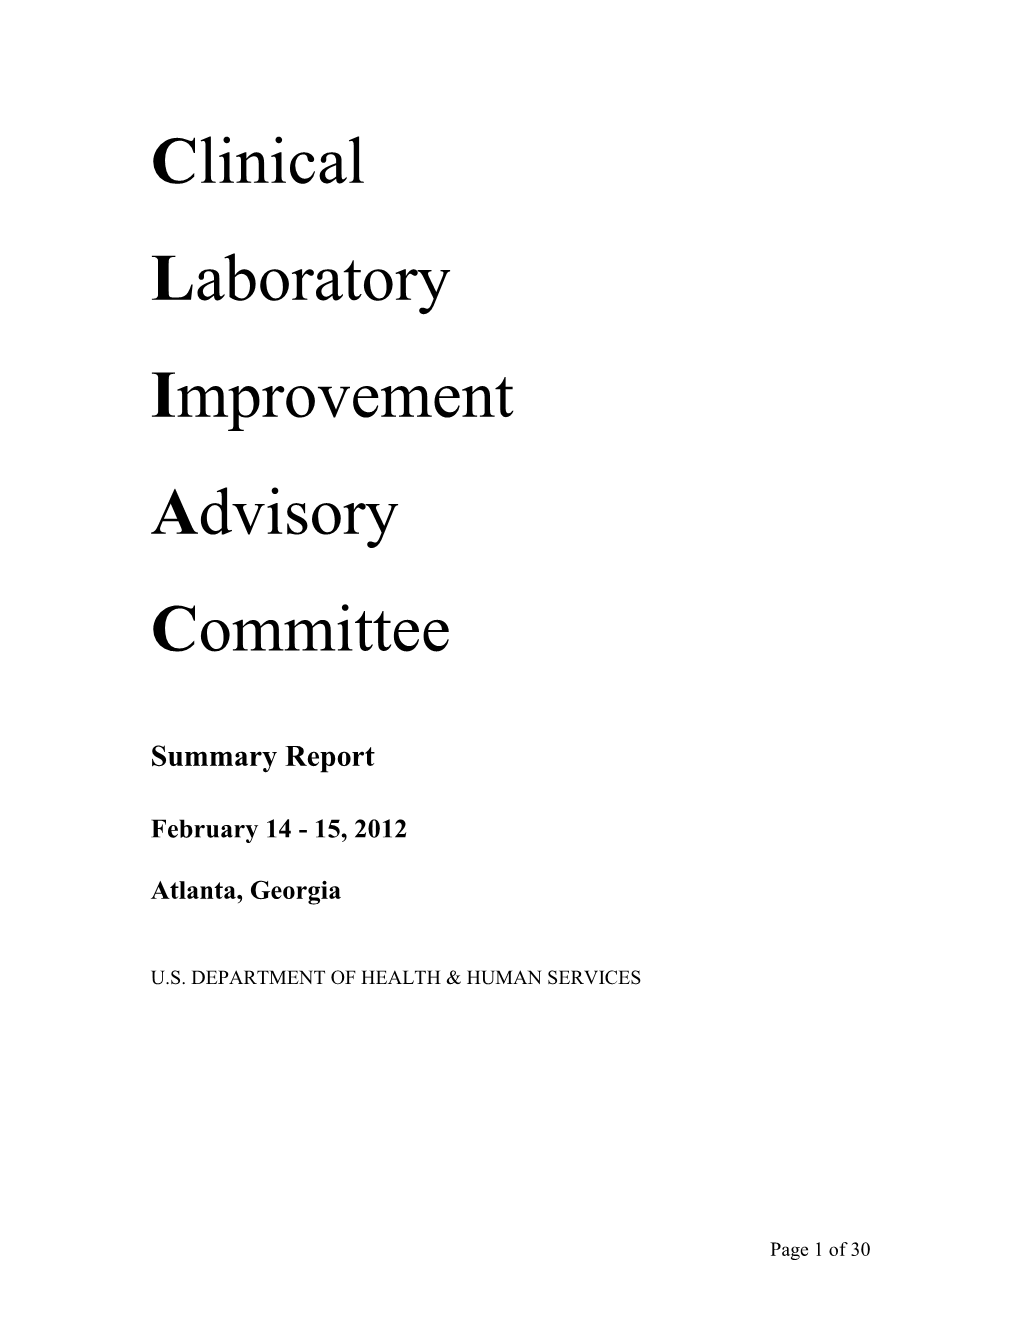 Clinical Laboratory Improvement Advisory Committee February 14 - 15, 2012 Summary Report